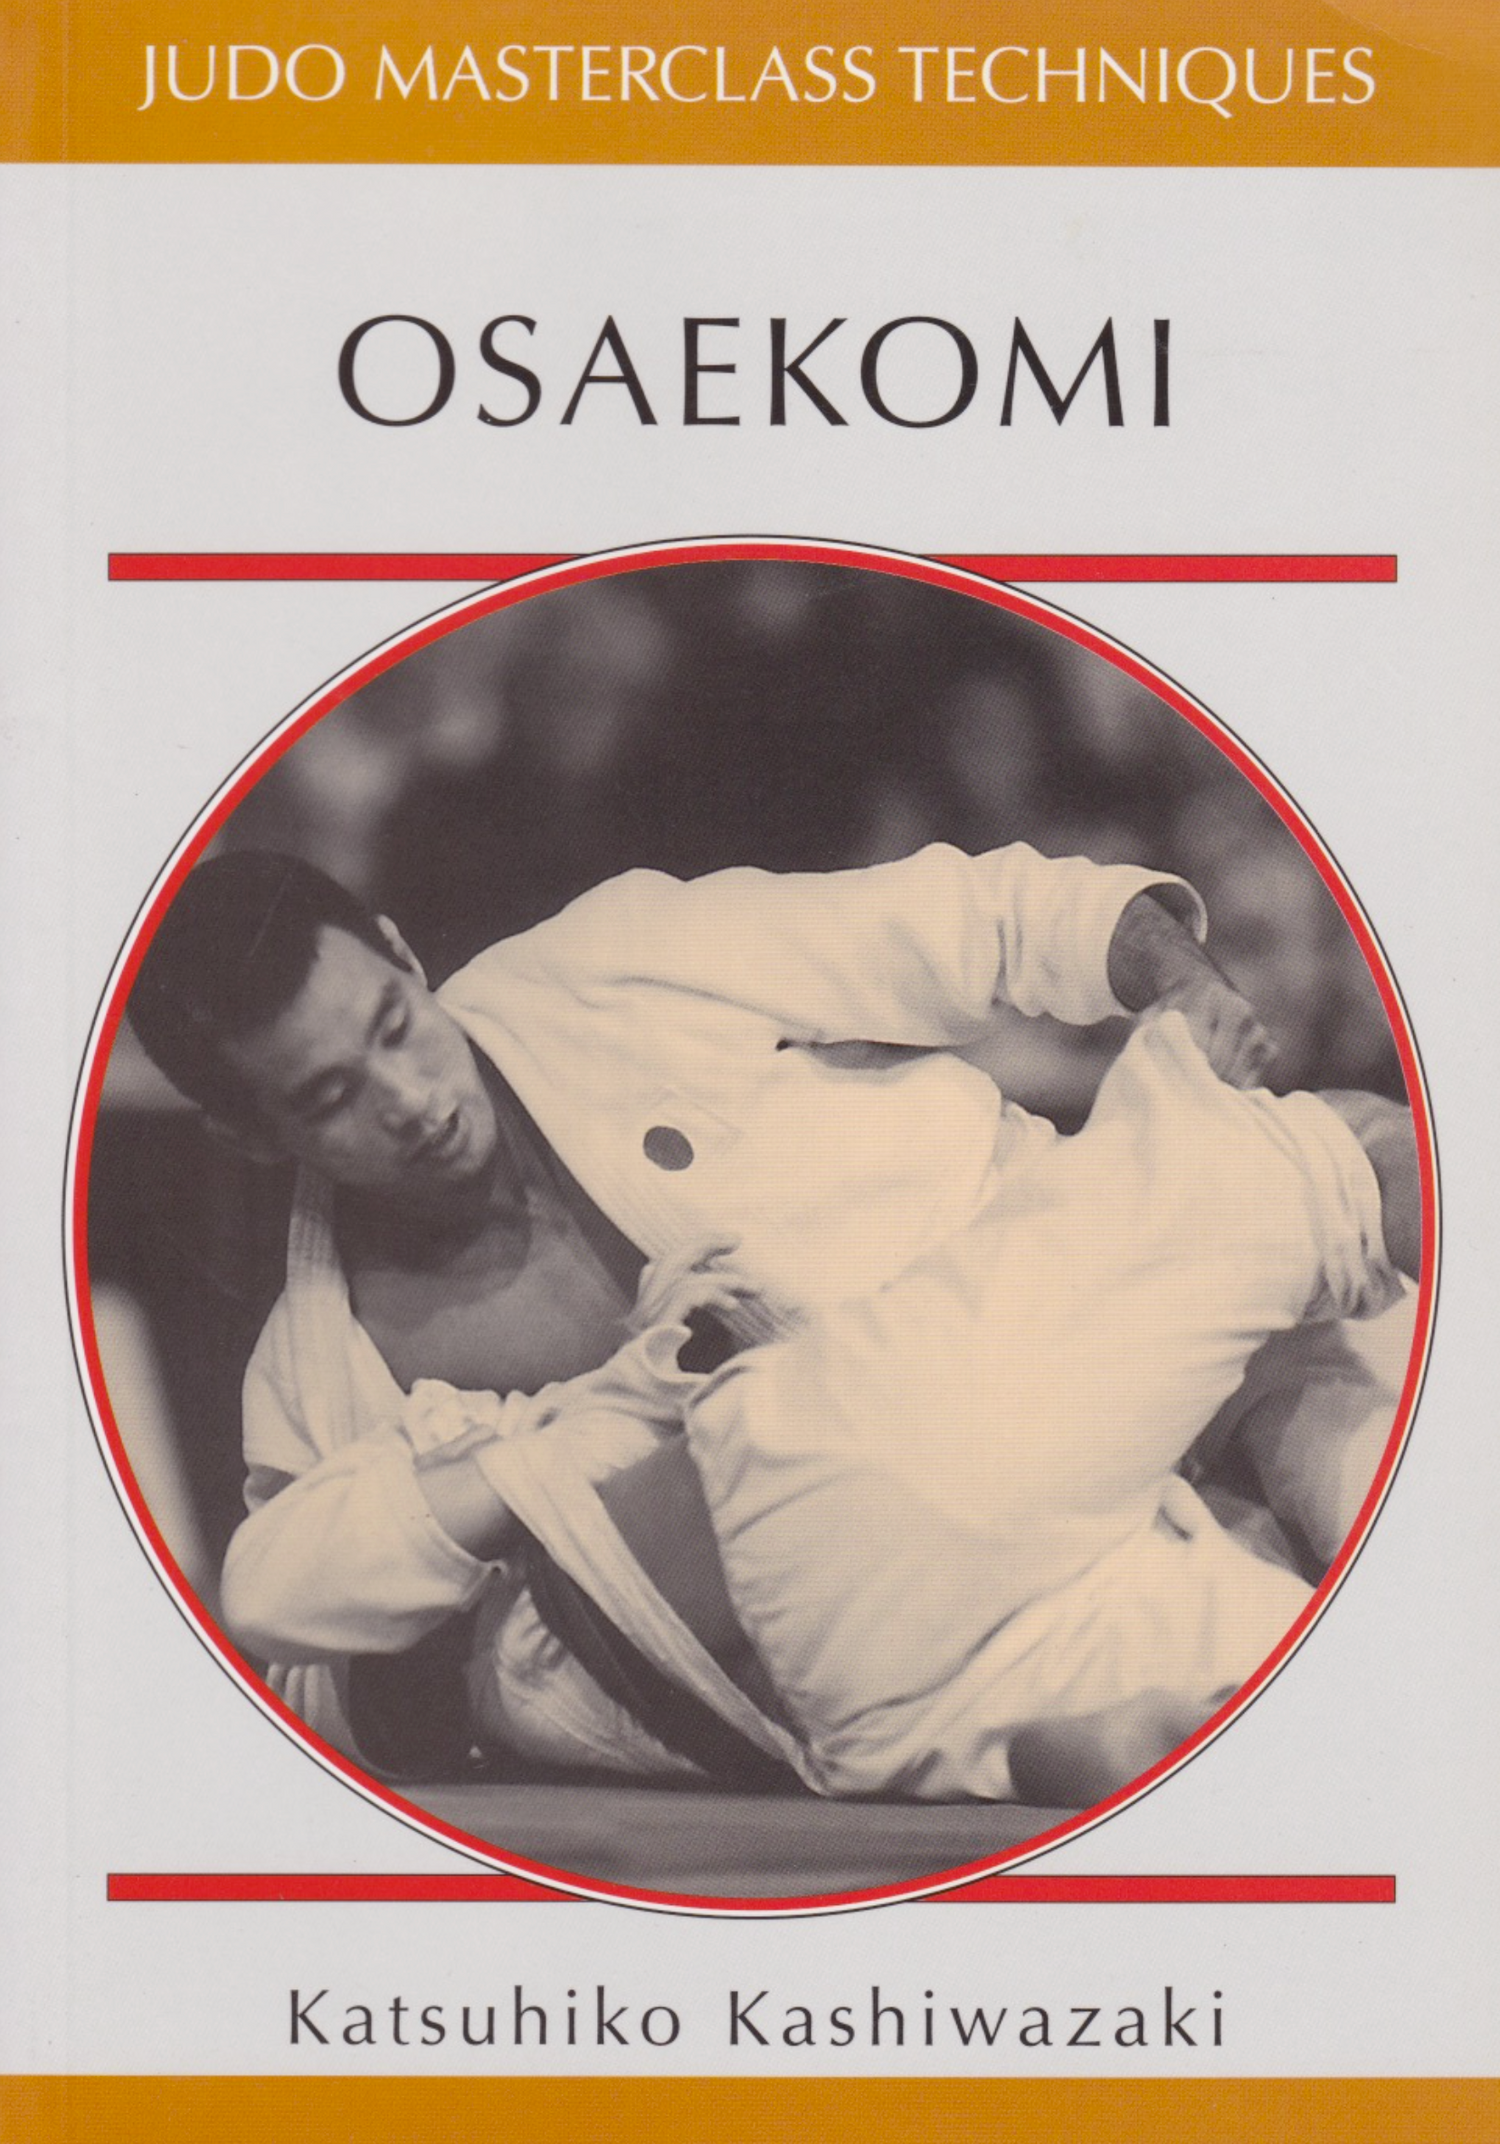 Osaekomi: Judo Masterclass Book by Katsuhiko Kashiwazaki (Preowned) - Budovideos Inc